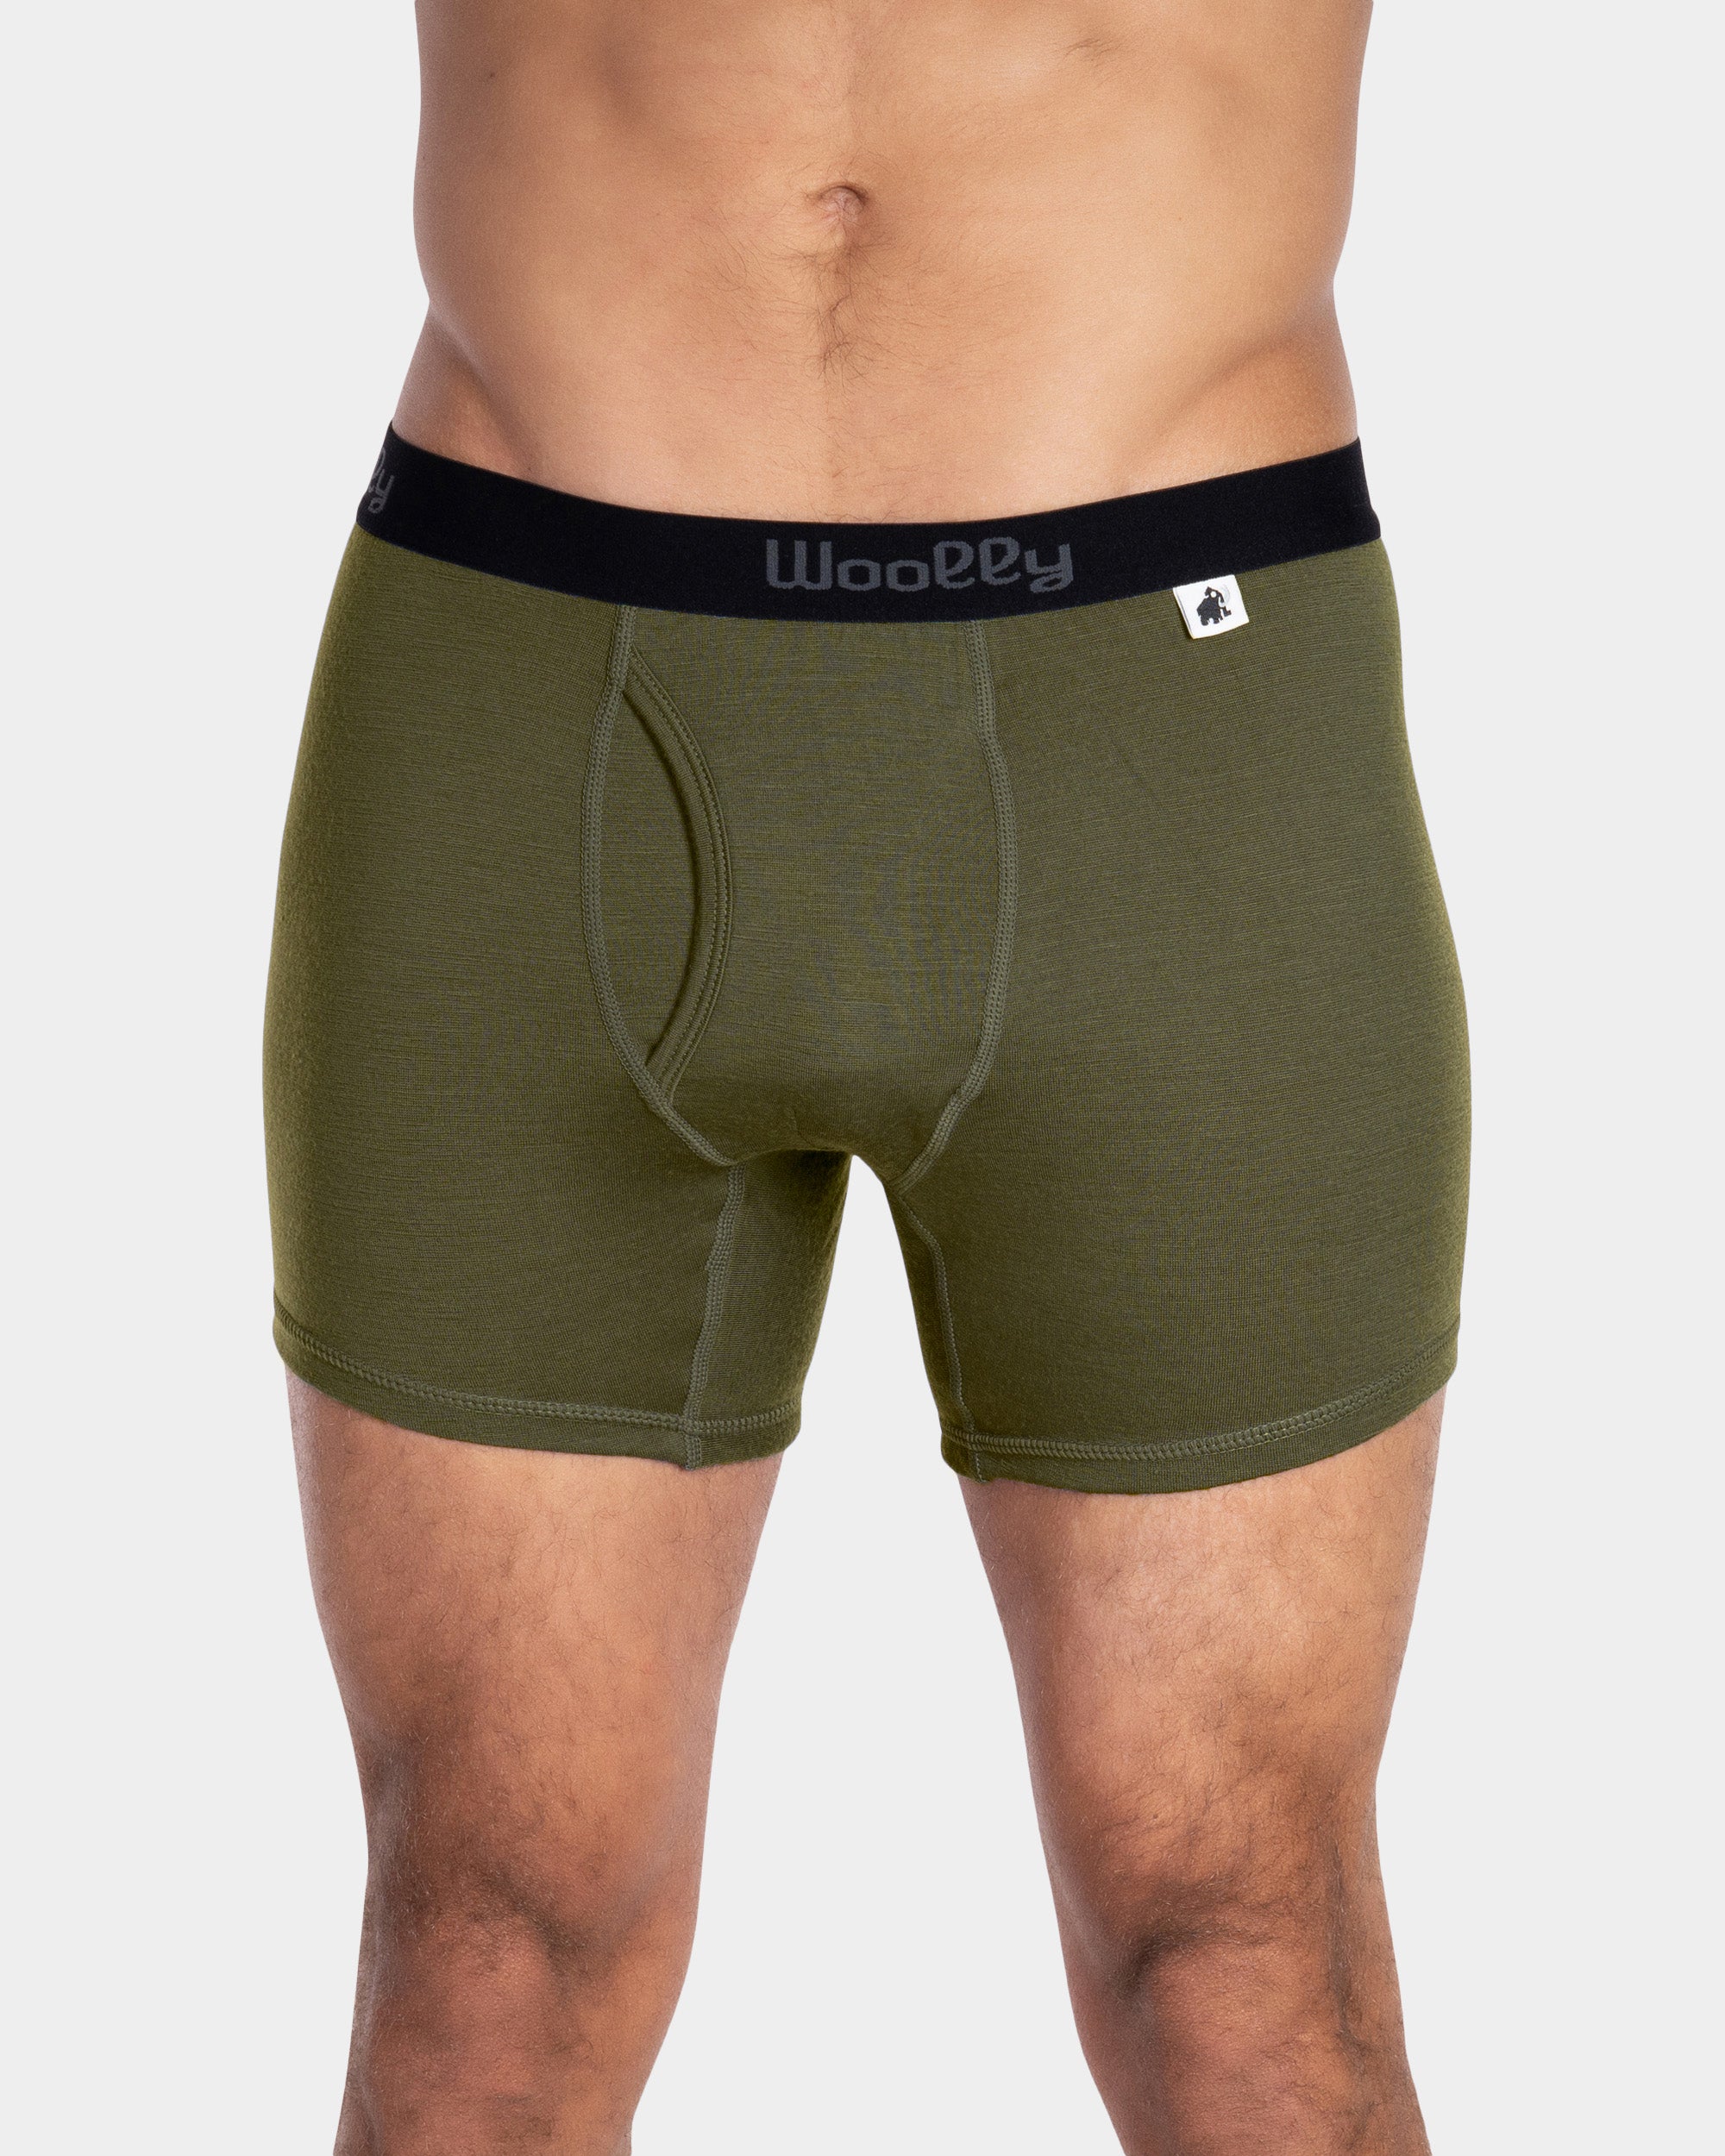 100% Merino Wool Mens Boxer Shorts Underwear 3 Pack Set Organic Underwear  Multipack Boxer Briefs Gifts for Boyfriend Sustainable Clothing -   Canada